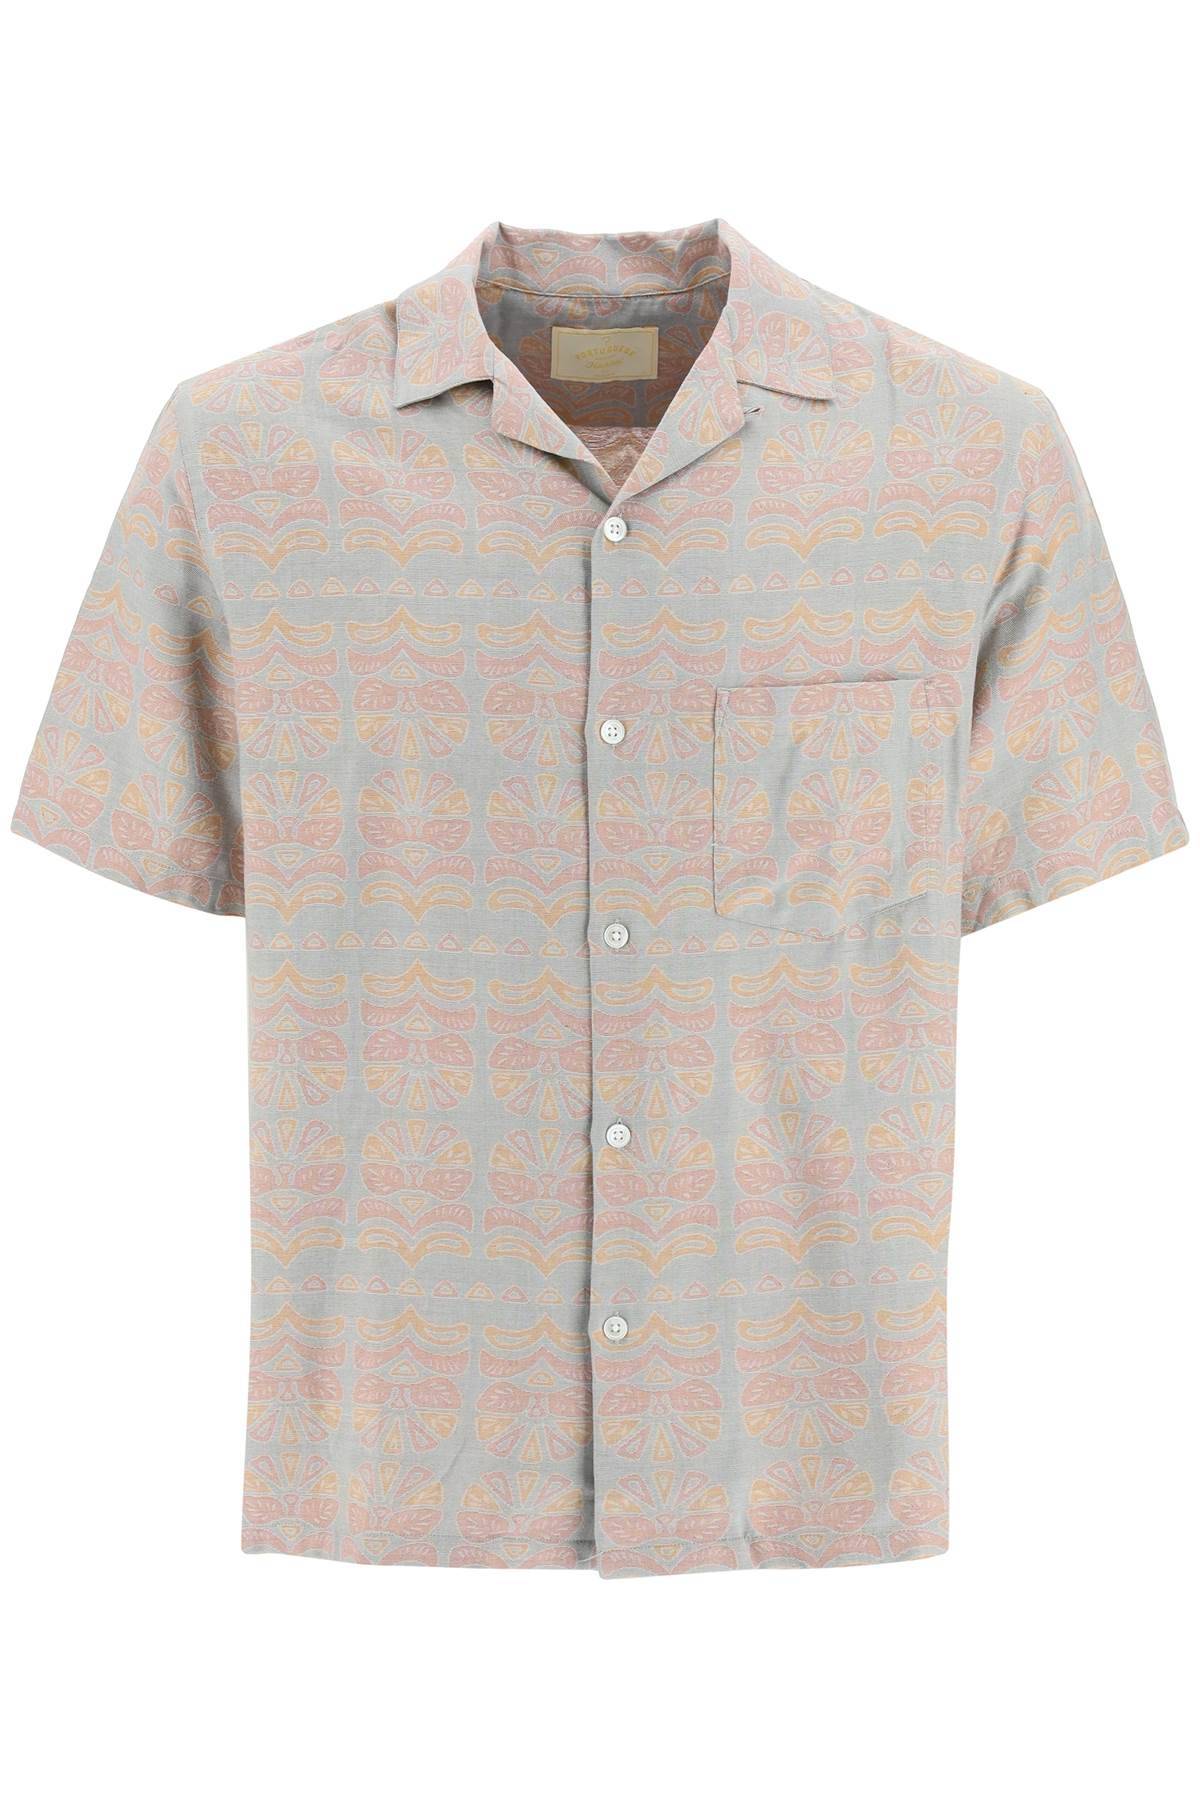 Portuguese Flannel PORTUGUESE FLANNEL cotton viscose 'resort' short sleeve shirt